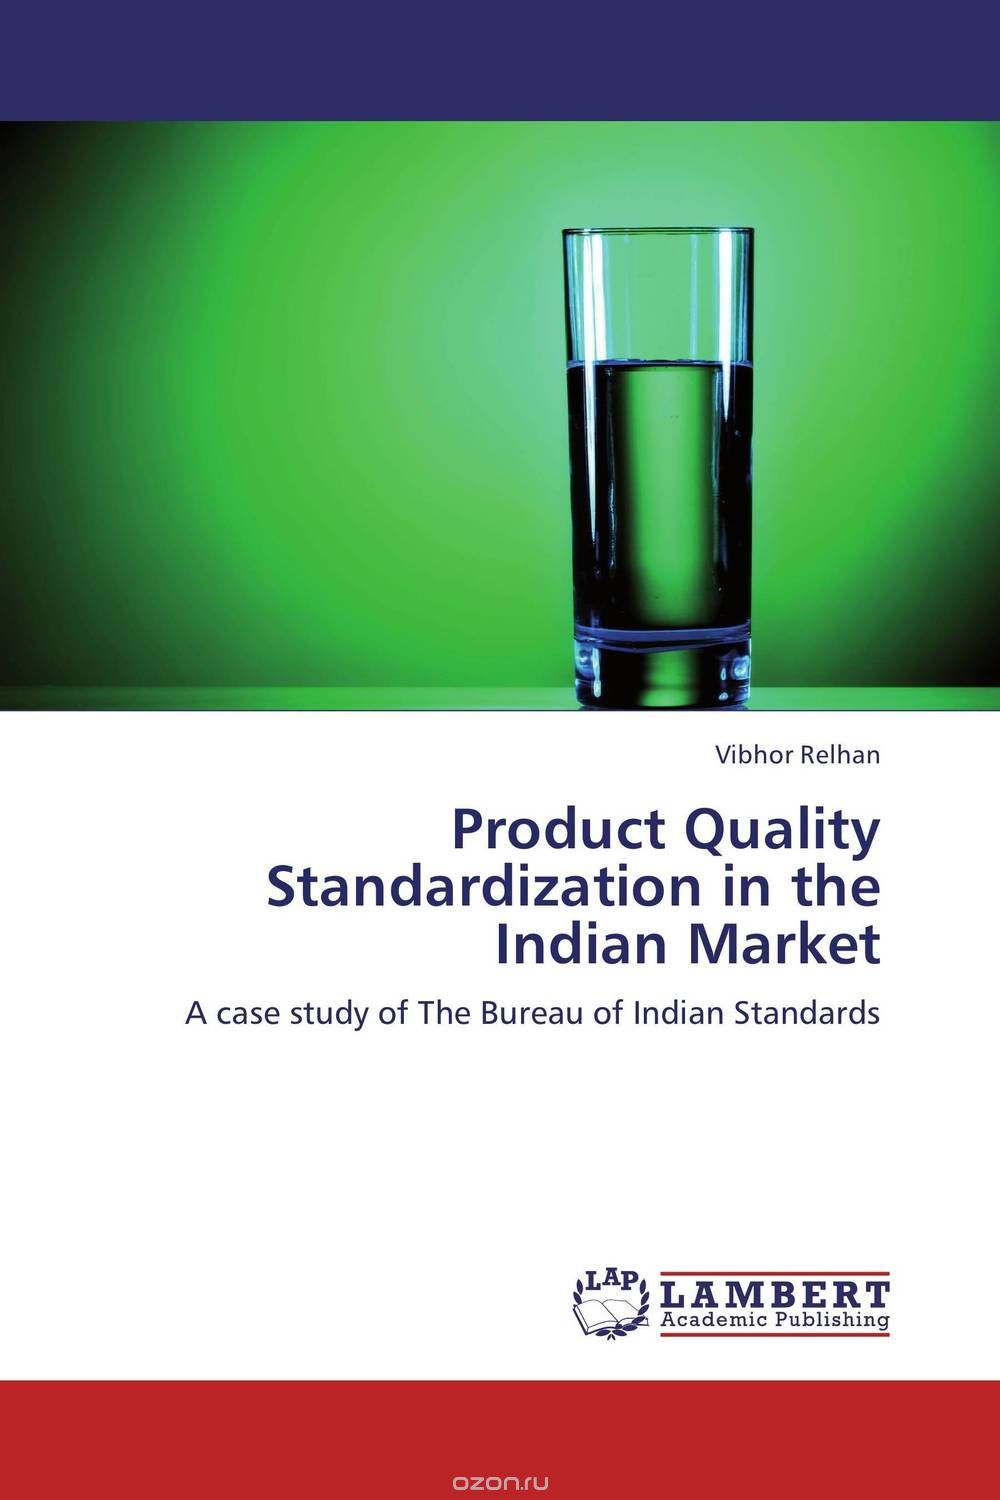 Скачать книгу "Product Quality Standardization in the Indian Market"